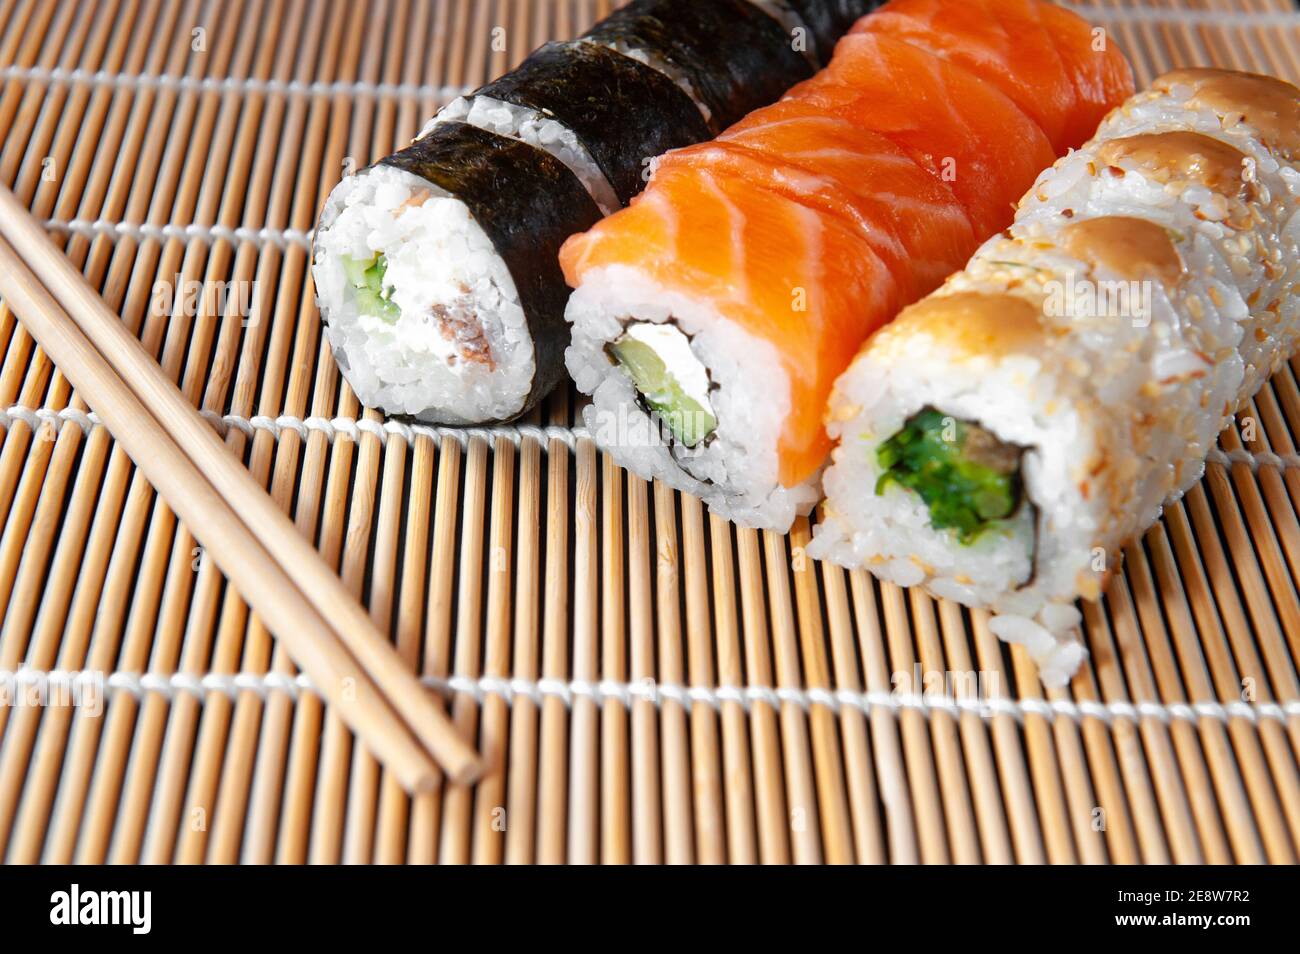 https://c8.alamy.com/comp/2E8W7R2/group-of-fresh-rolled-sushi-on-bamboo-sushi-mat-2E8W7R2.jpg